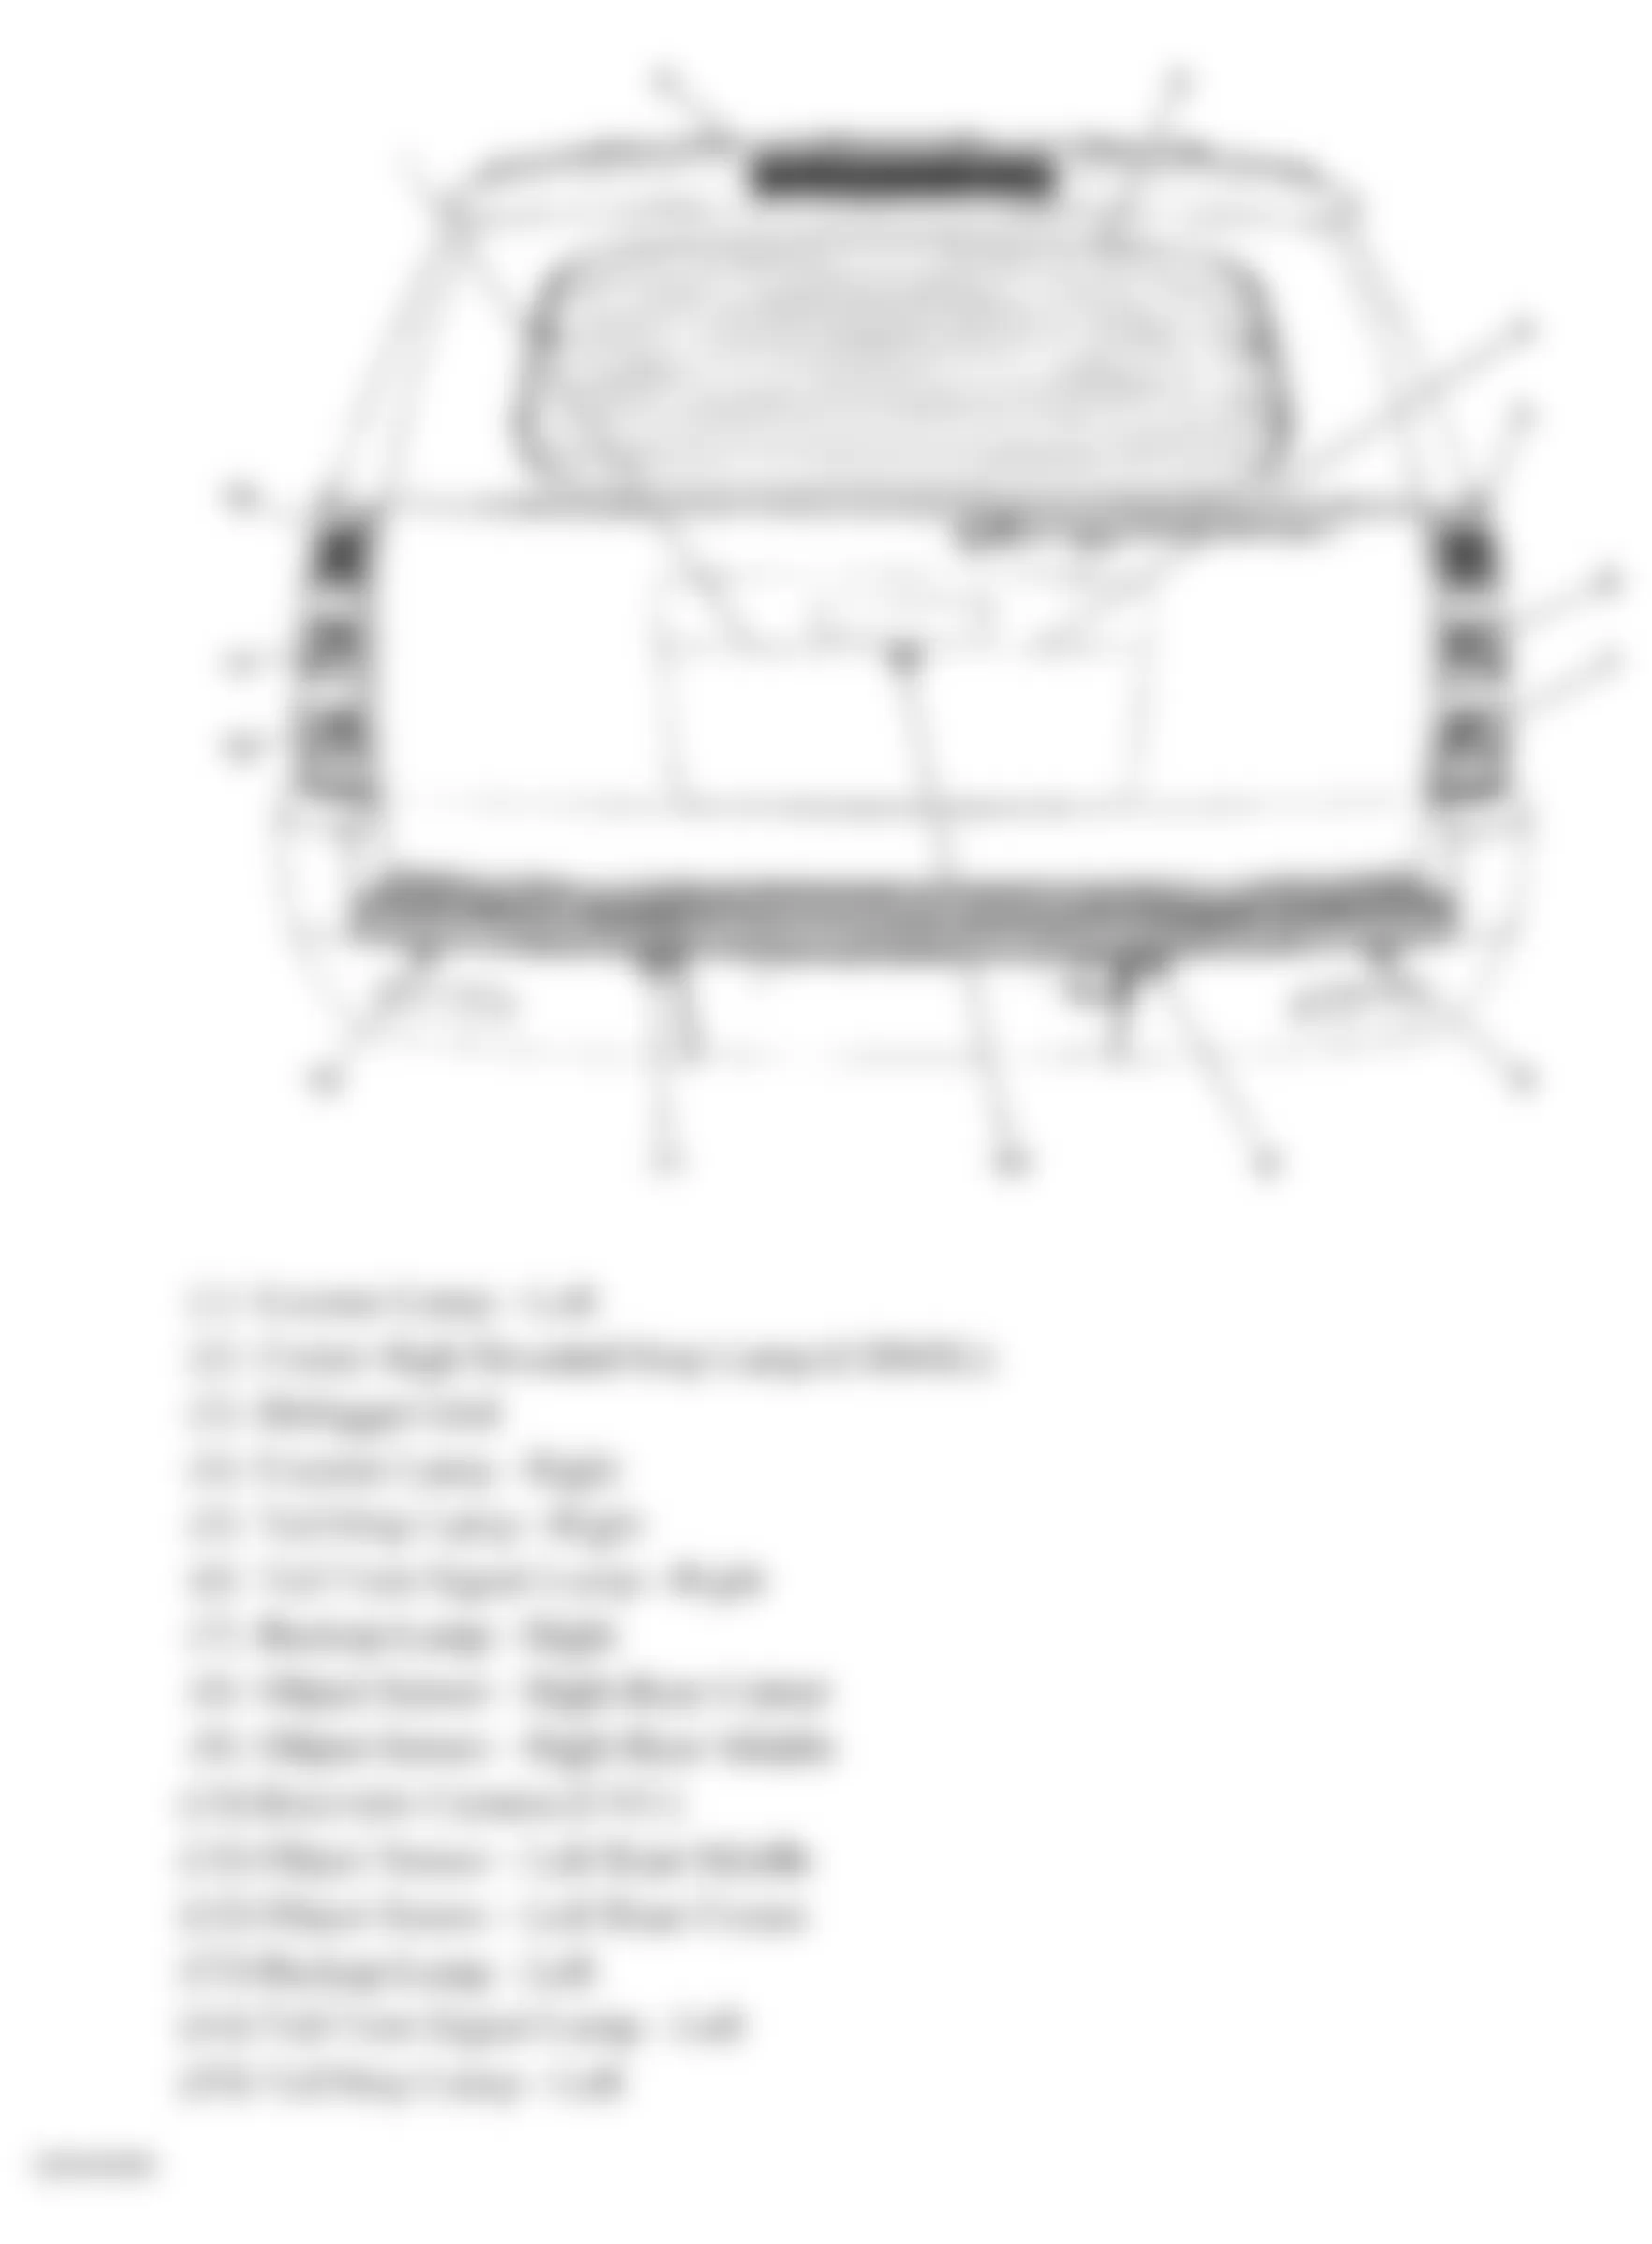 GMC Yukon Hybrid 2008 - Component Locations -  Rear Of Vehicle (Yukon W/One Piece Liftgate)